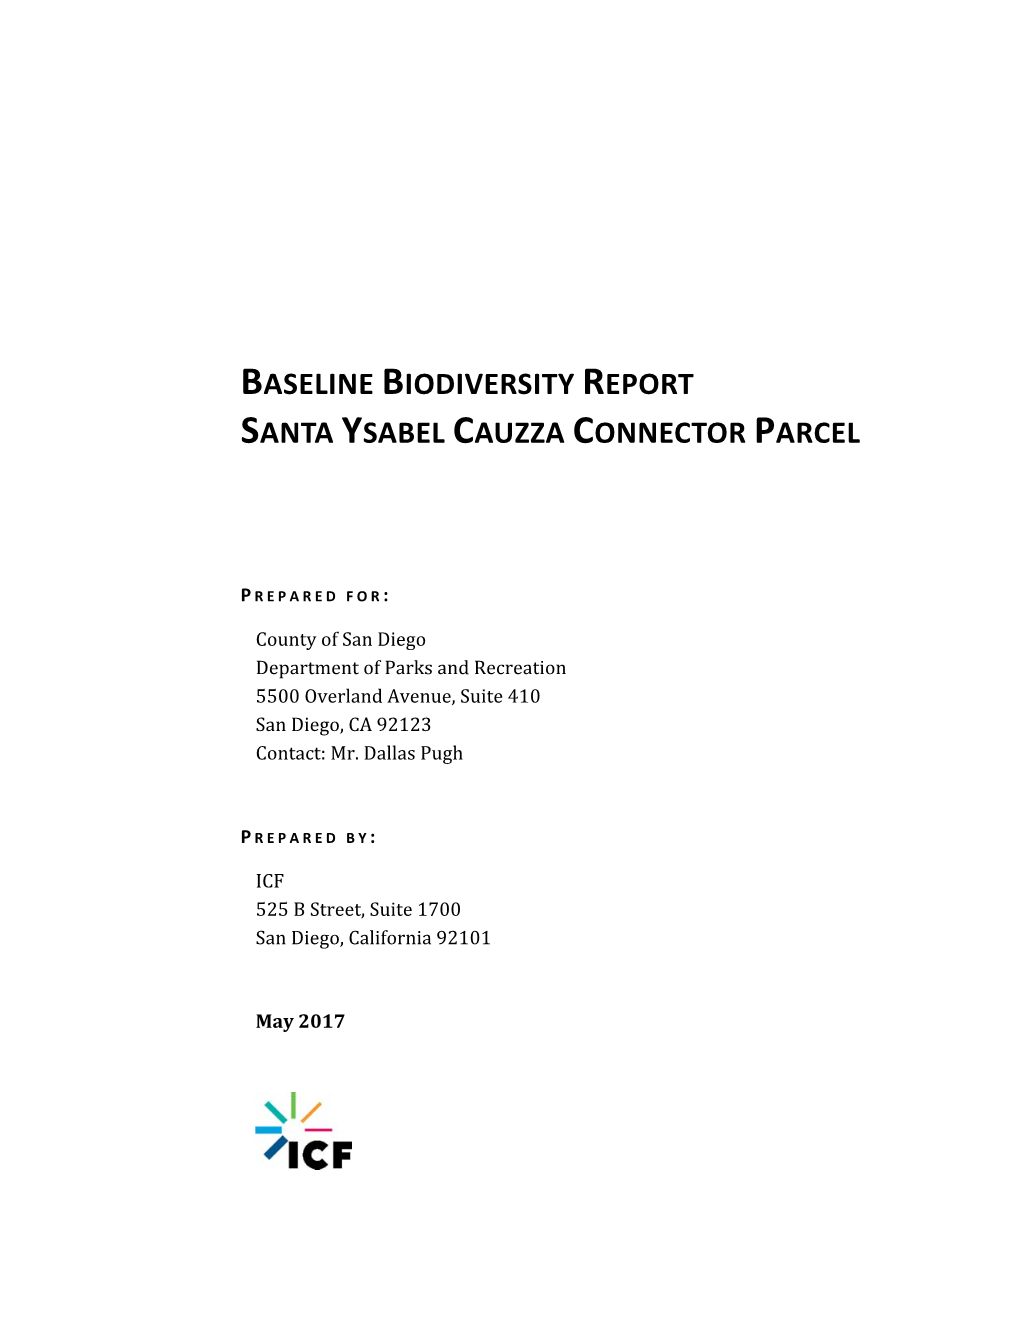 Baseline Biodiversity Report Santa Ysabel Cauzza Connector Parcel